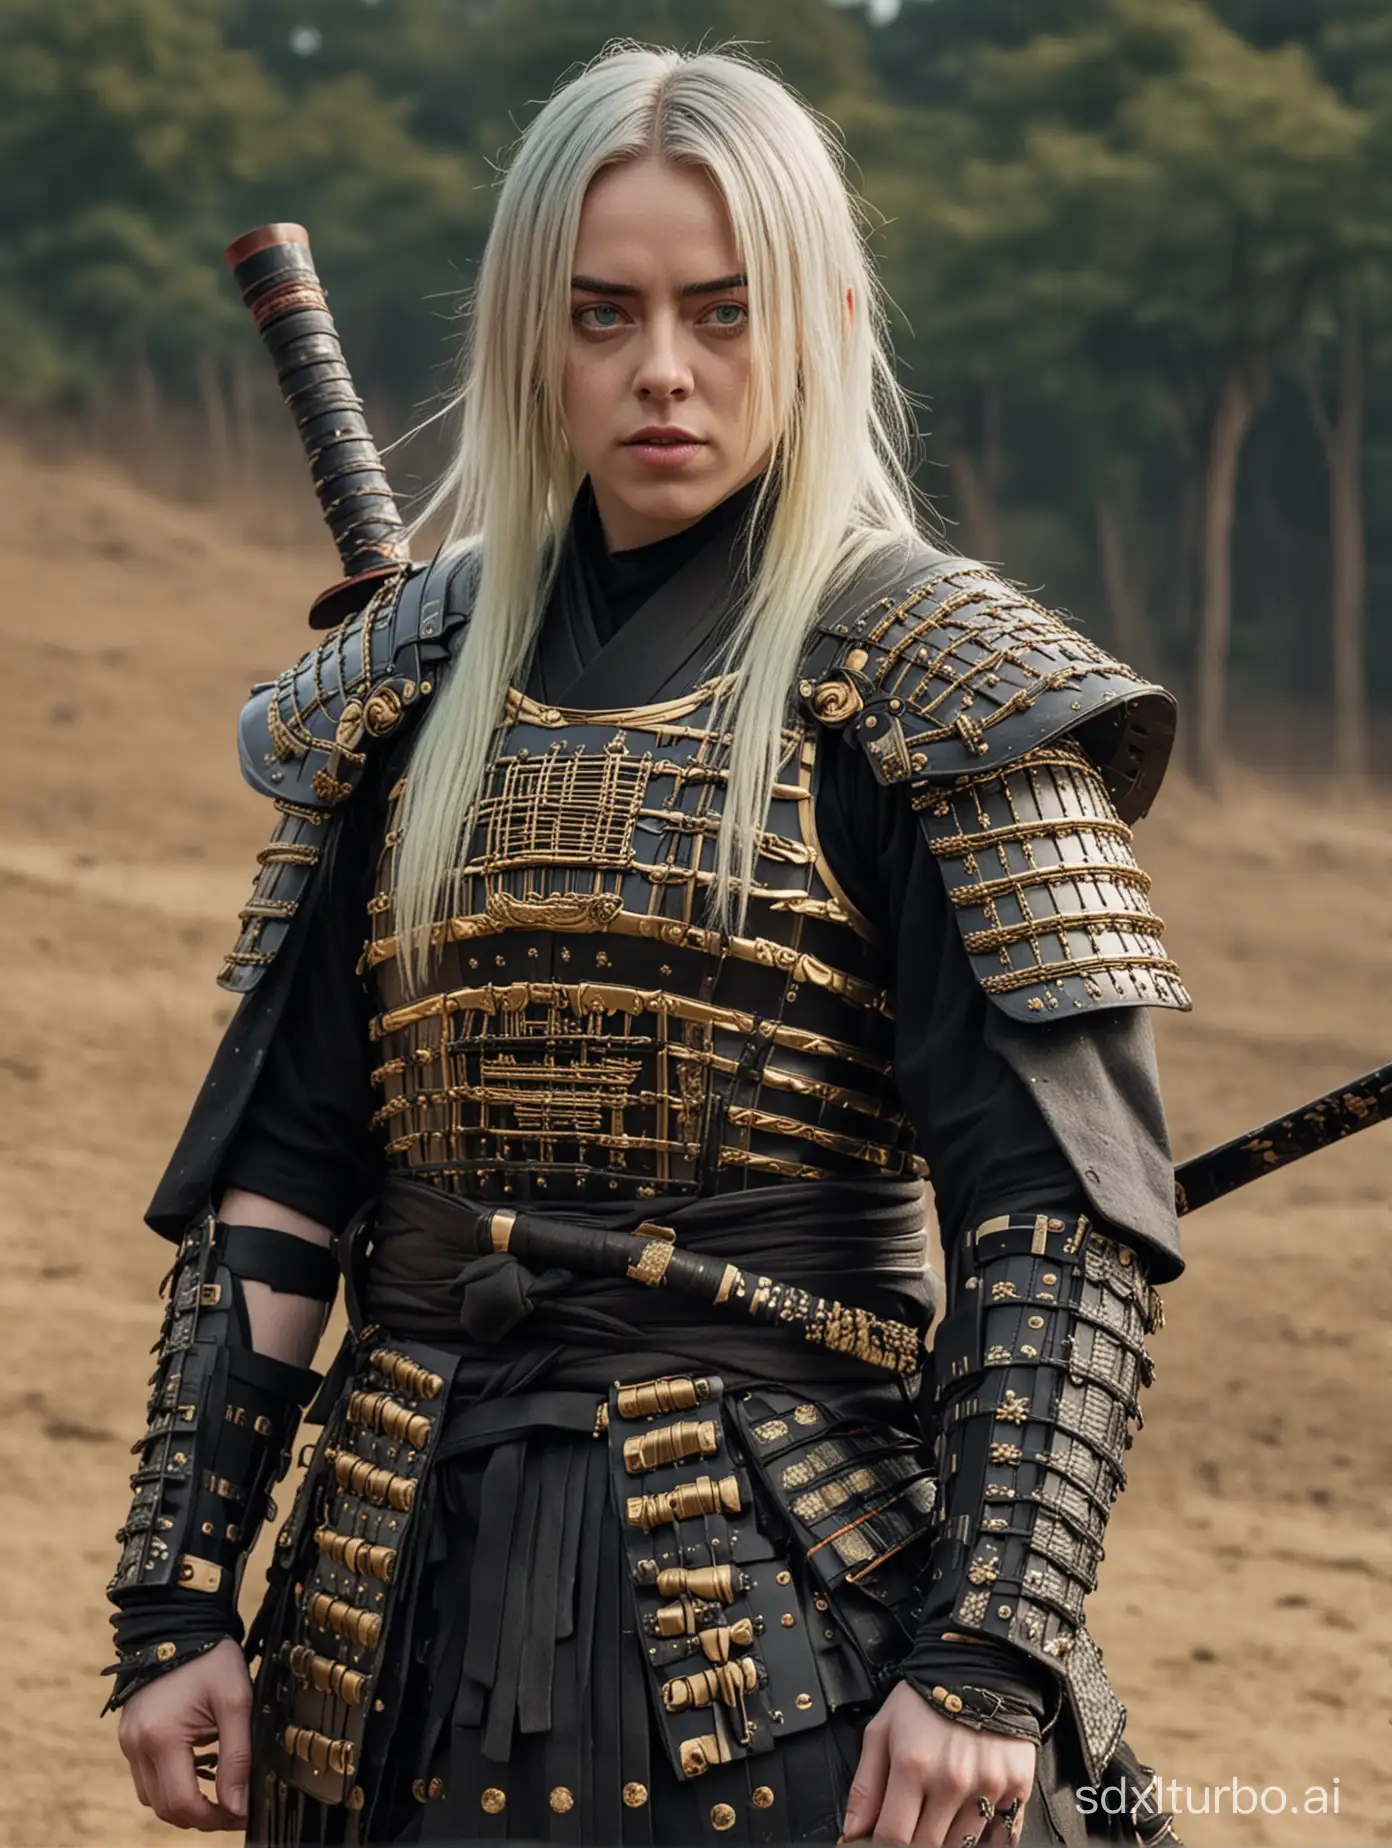 Billie Eilish puts on ancient Japanese warrior armor and wields a katana on the battlefield